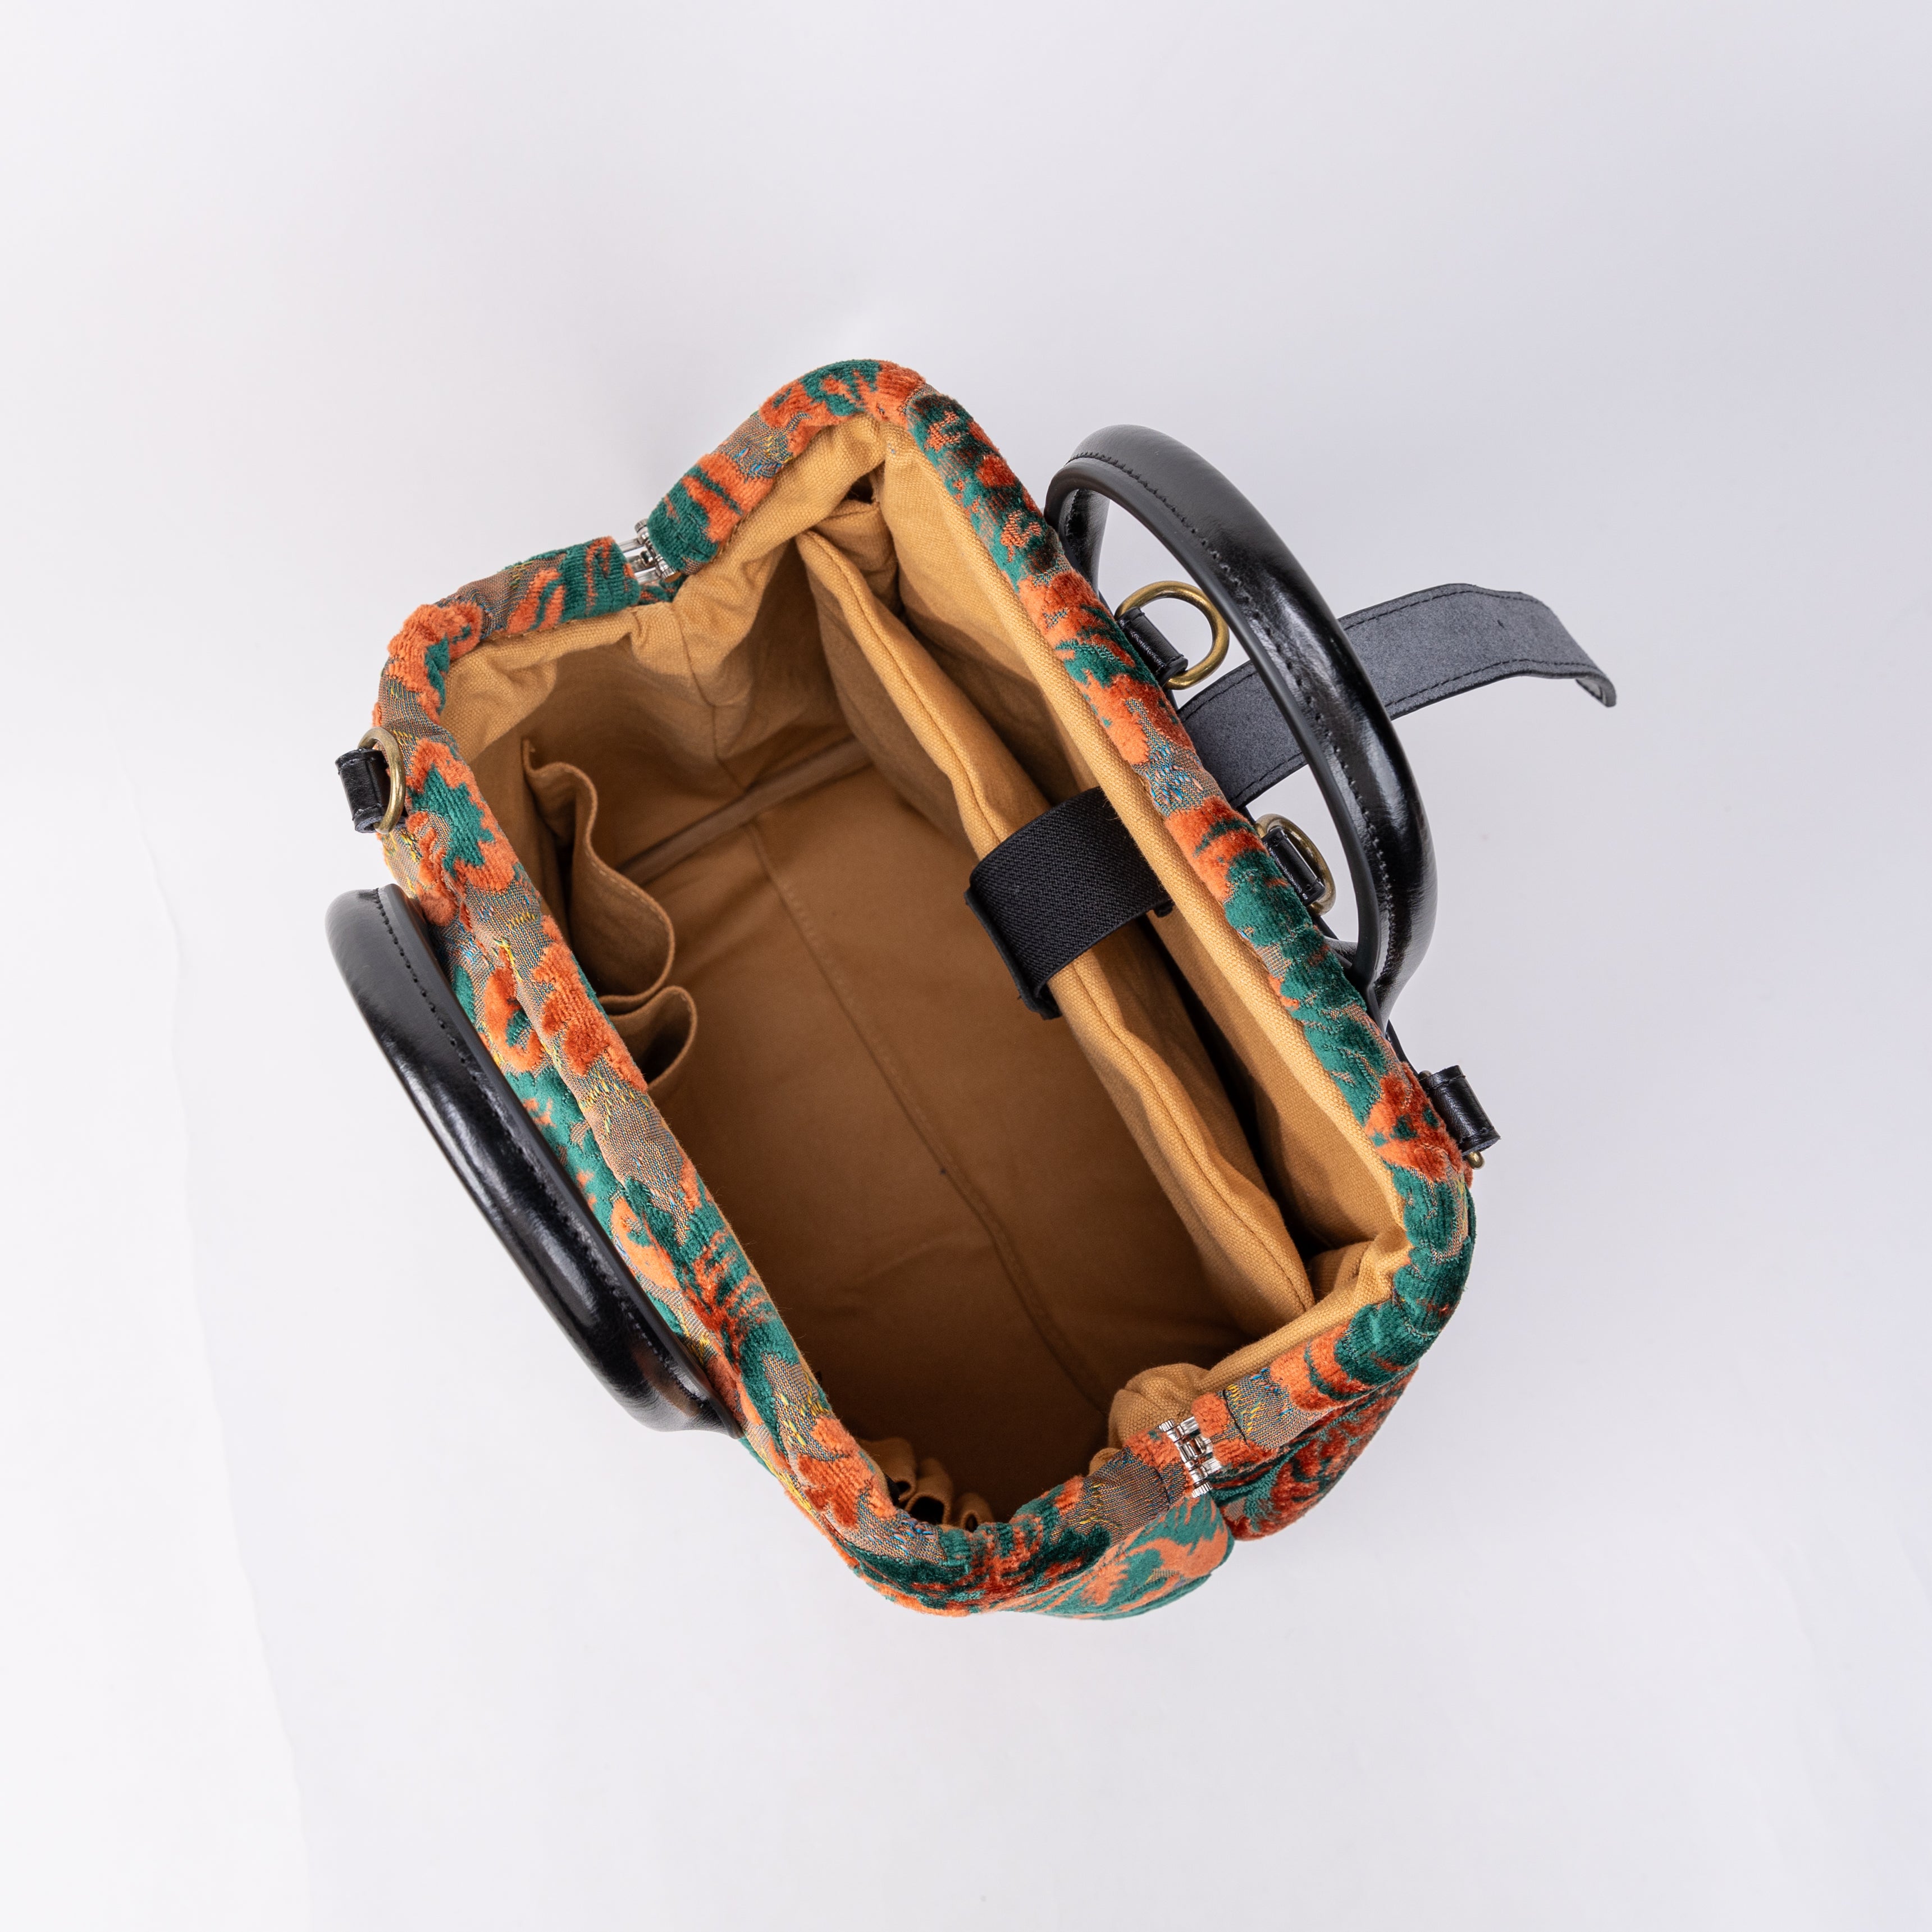 Revival jade Carpet Laptop Backpack Mary Poppins Bag inside